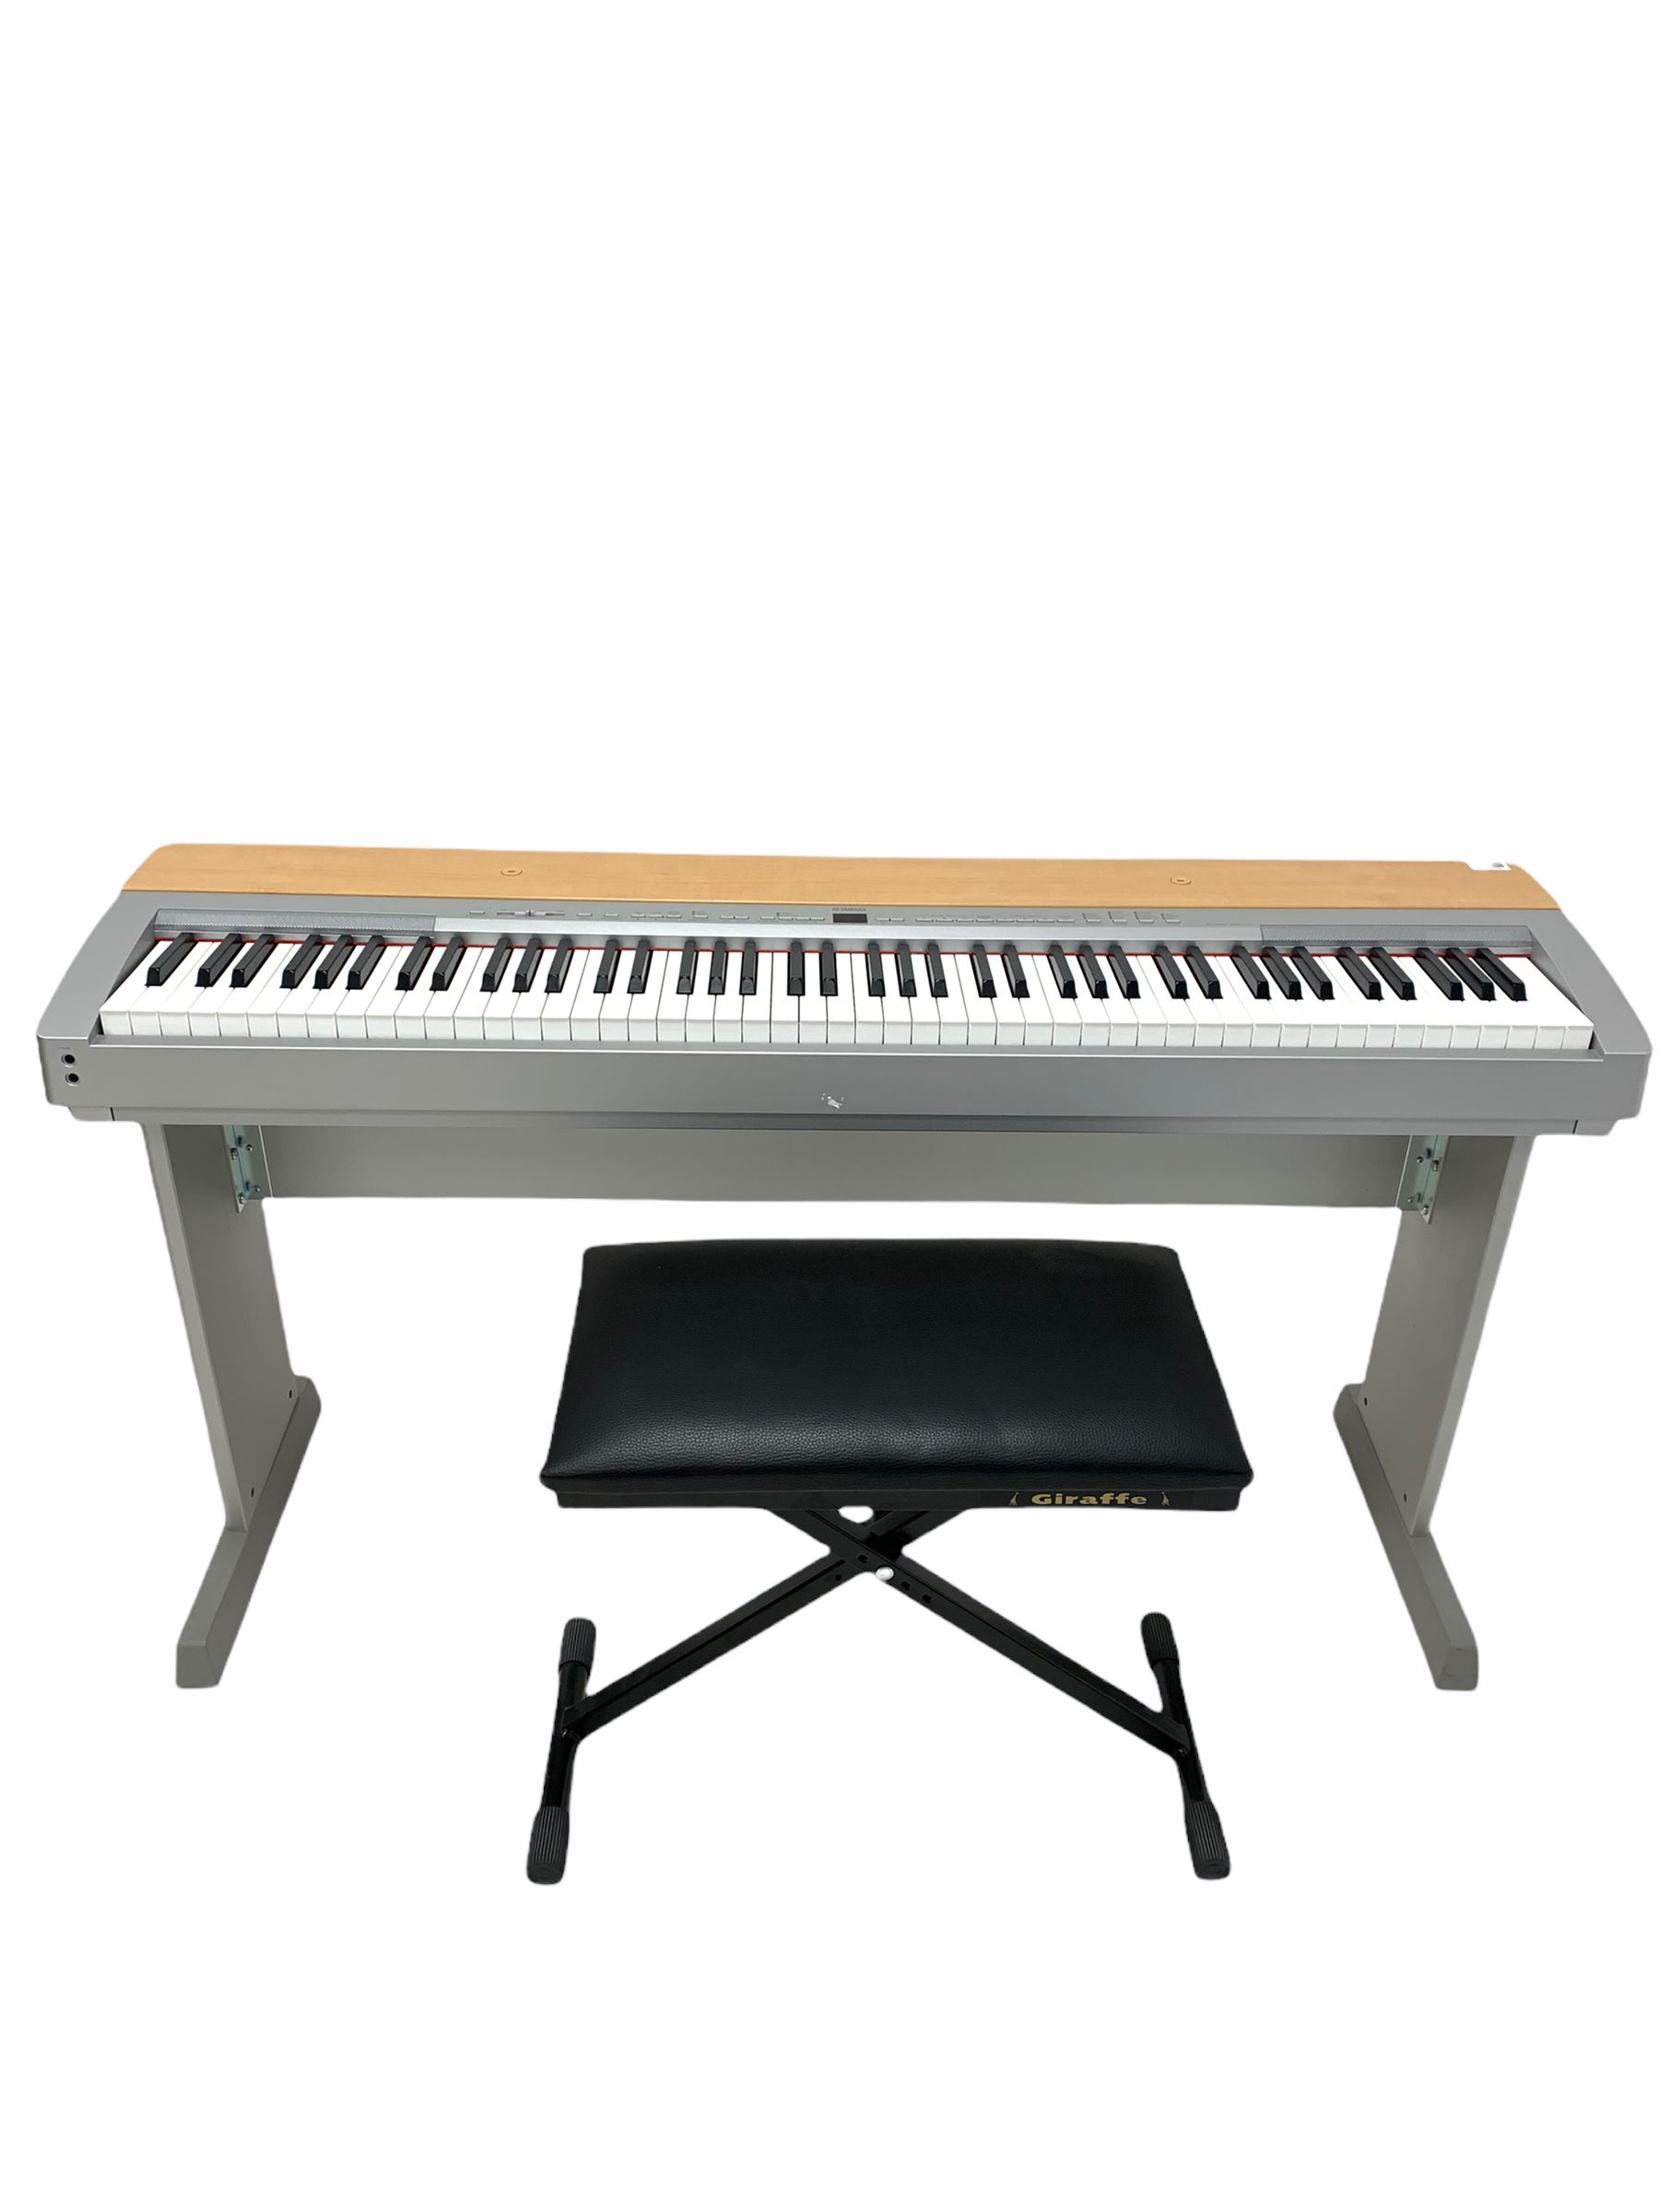 Yamaha P1-40 electric piano - Image 2 of 3